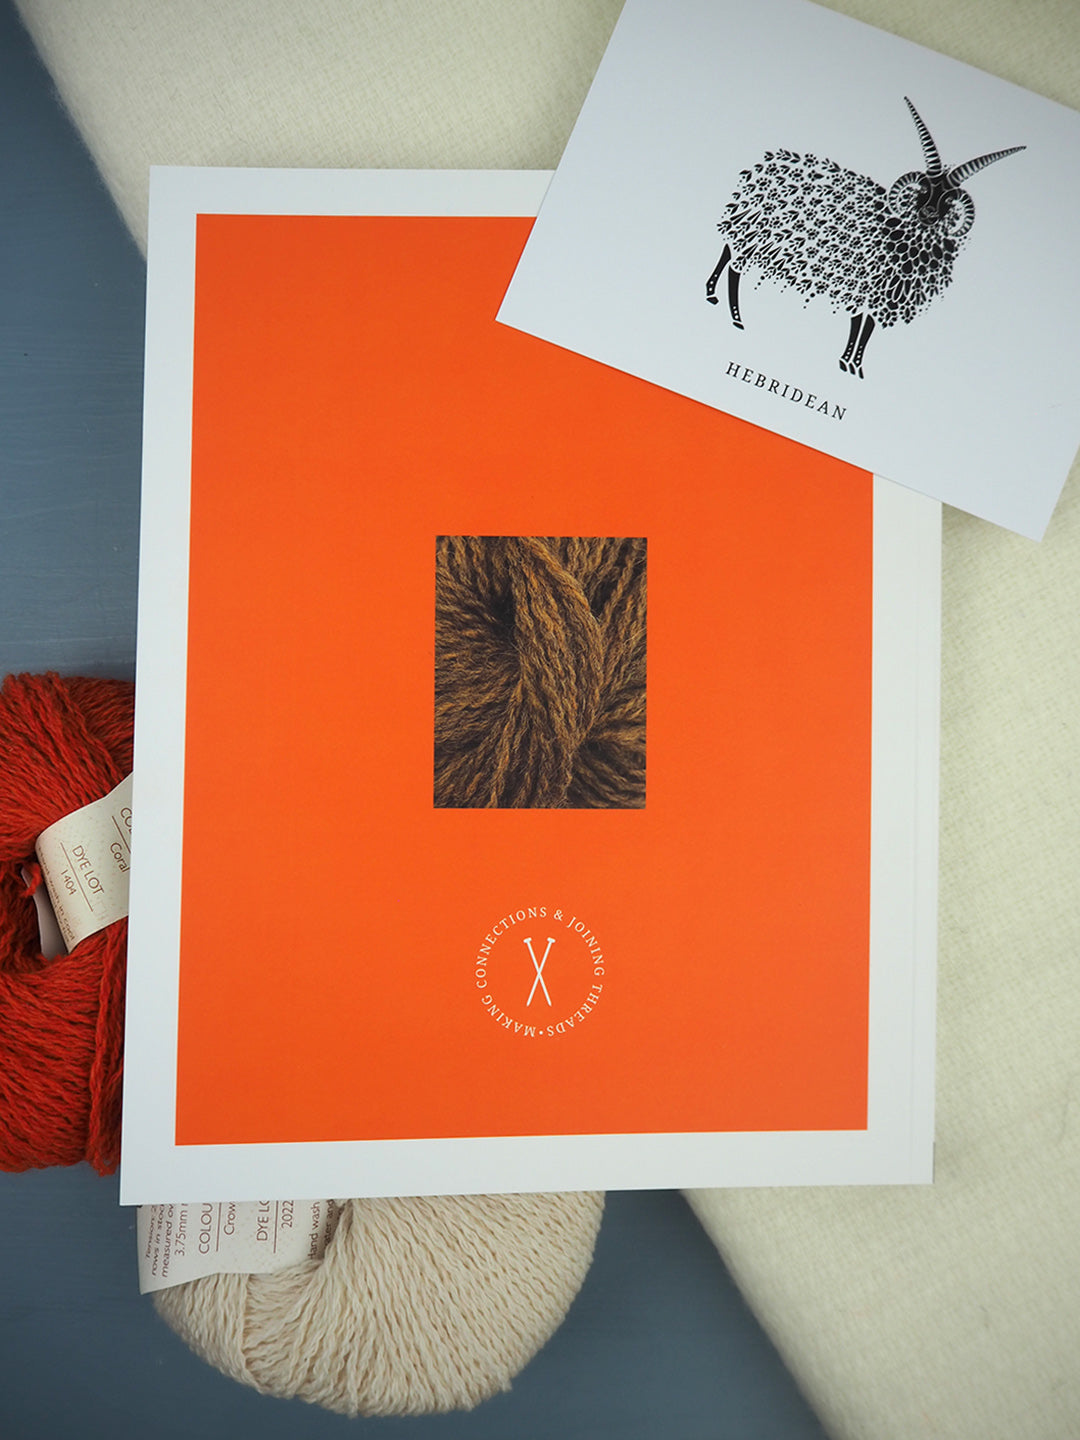 Journal of scottish yarns issue 2 - Scottish textiles showcase